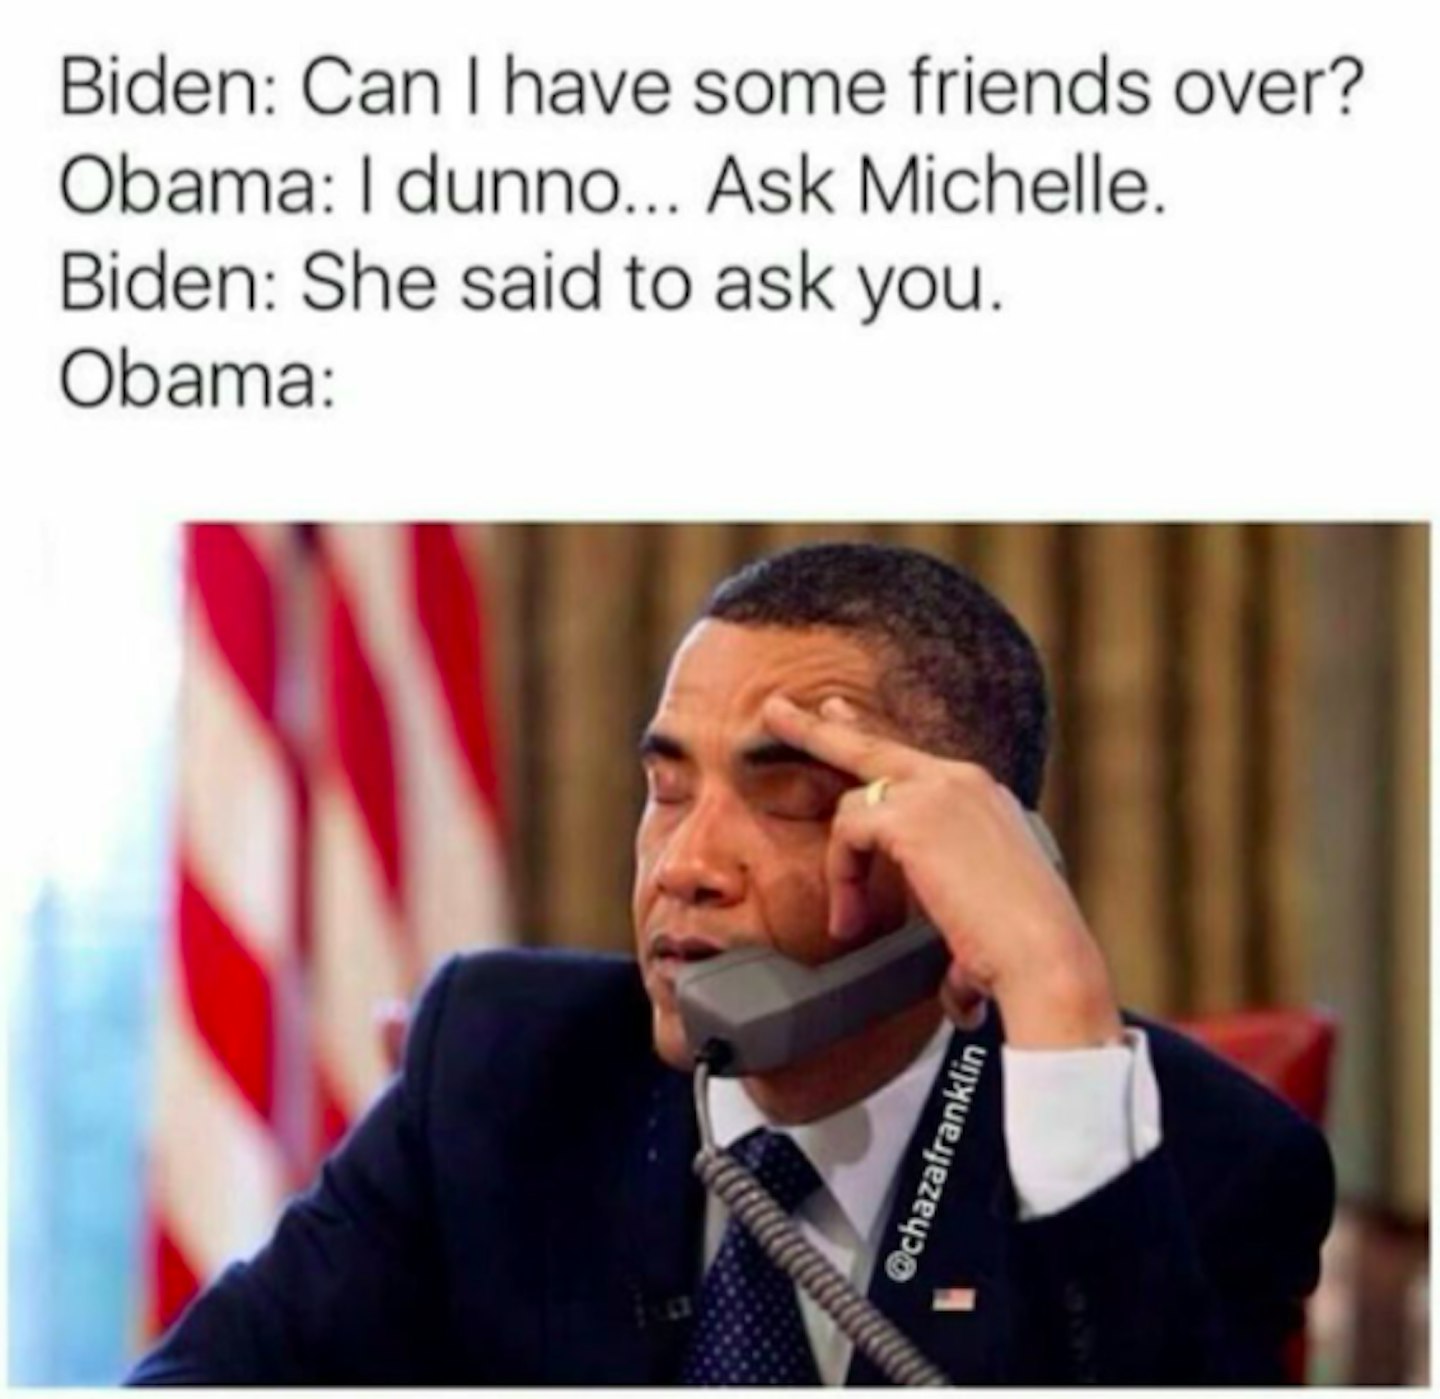 The Best Joe Biden And Barack Obama Bromance Memes - Grazia